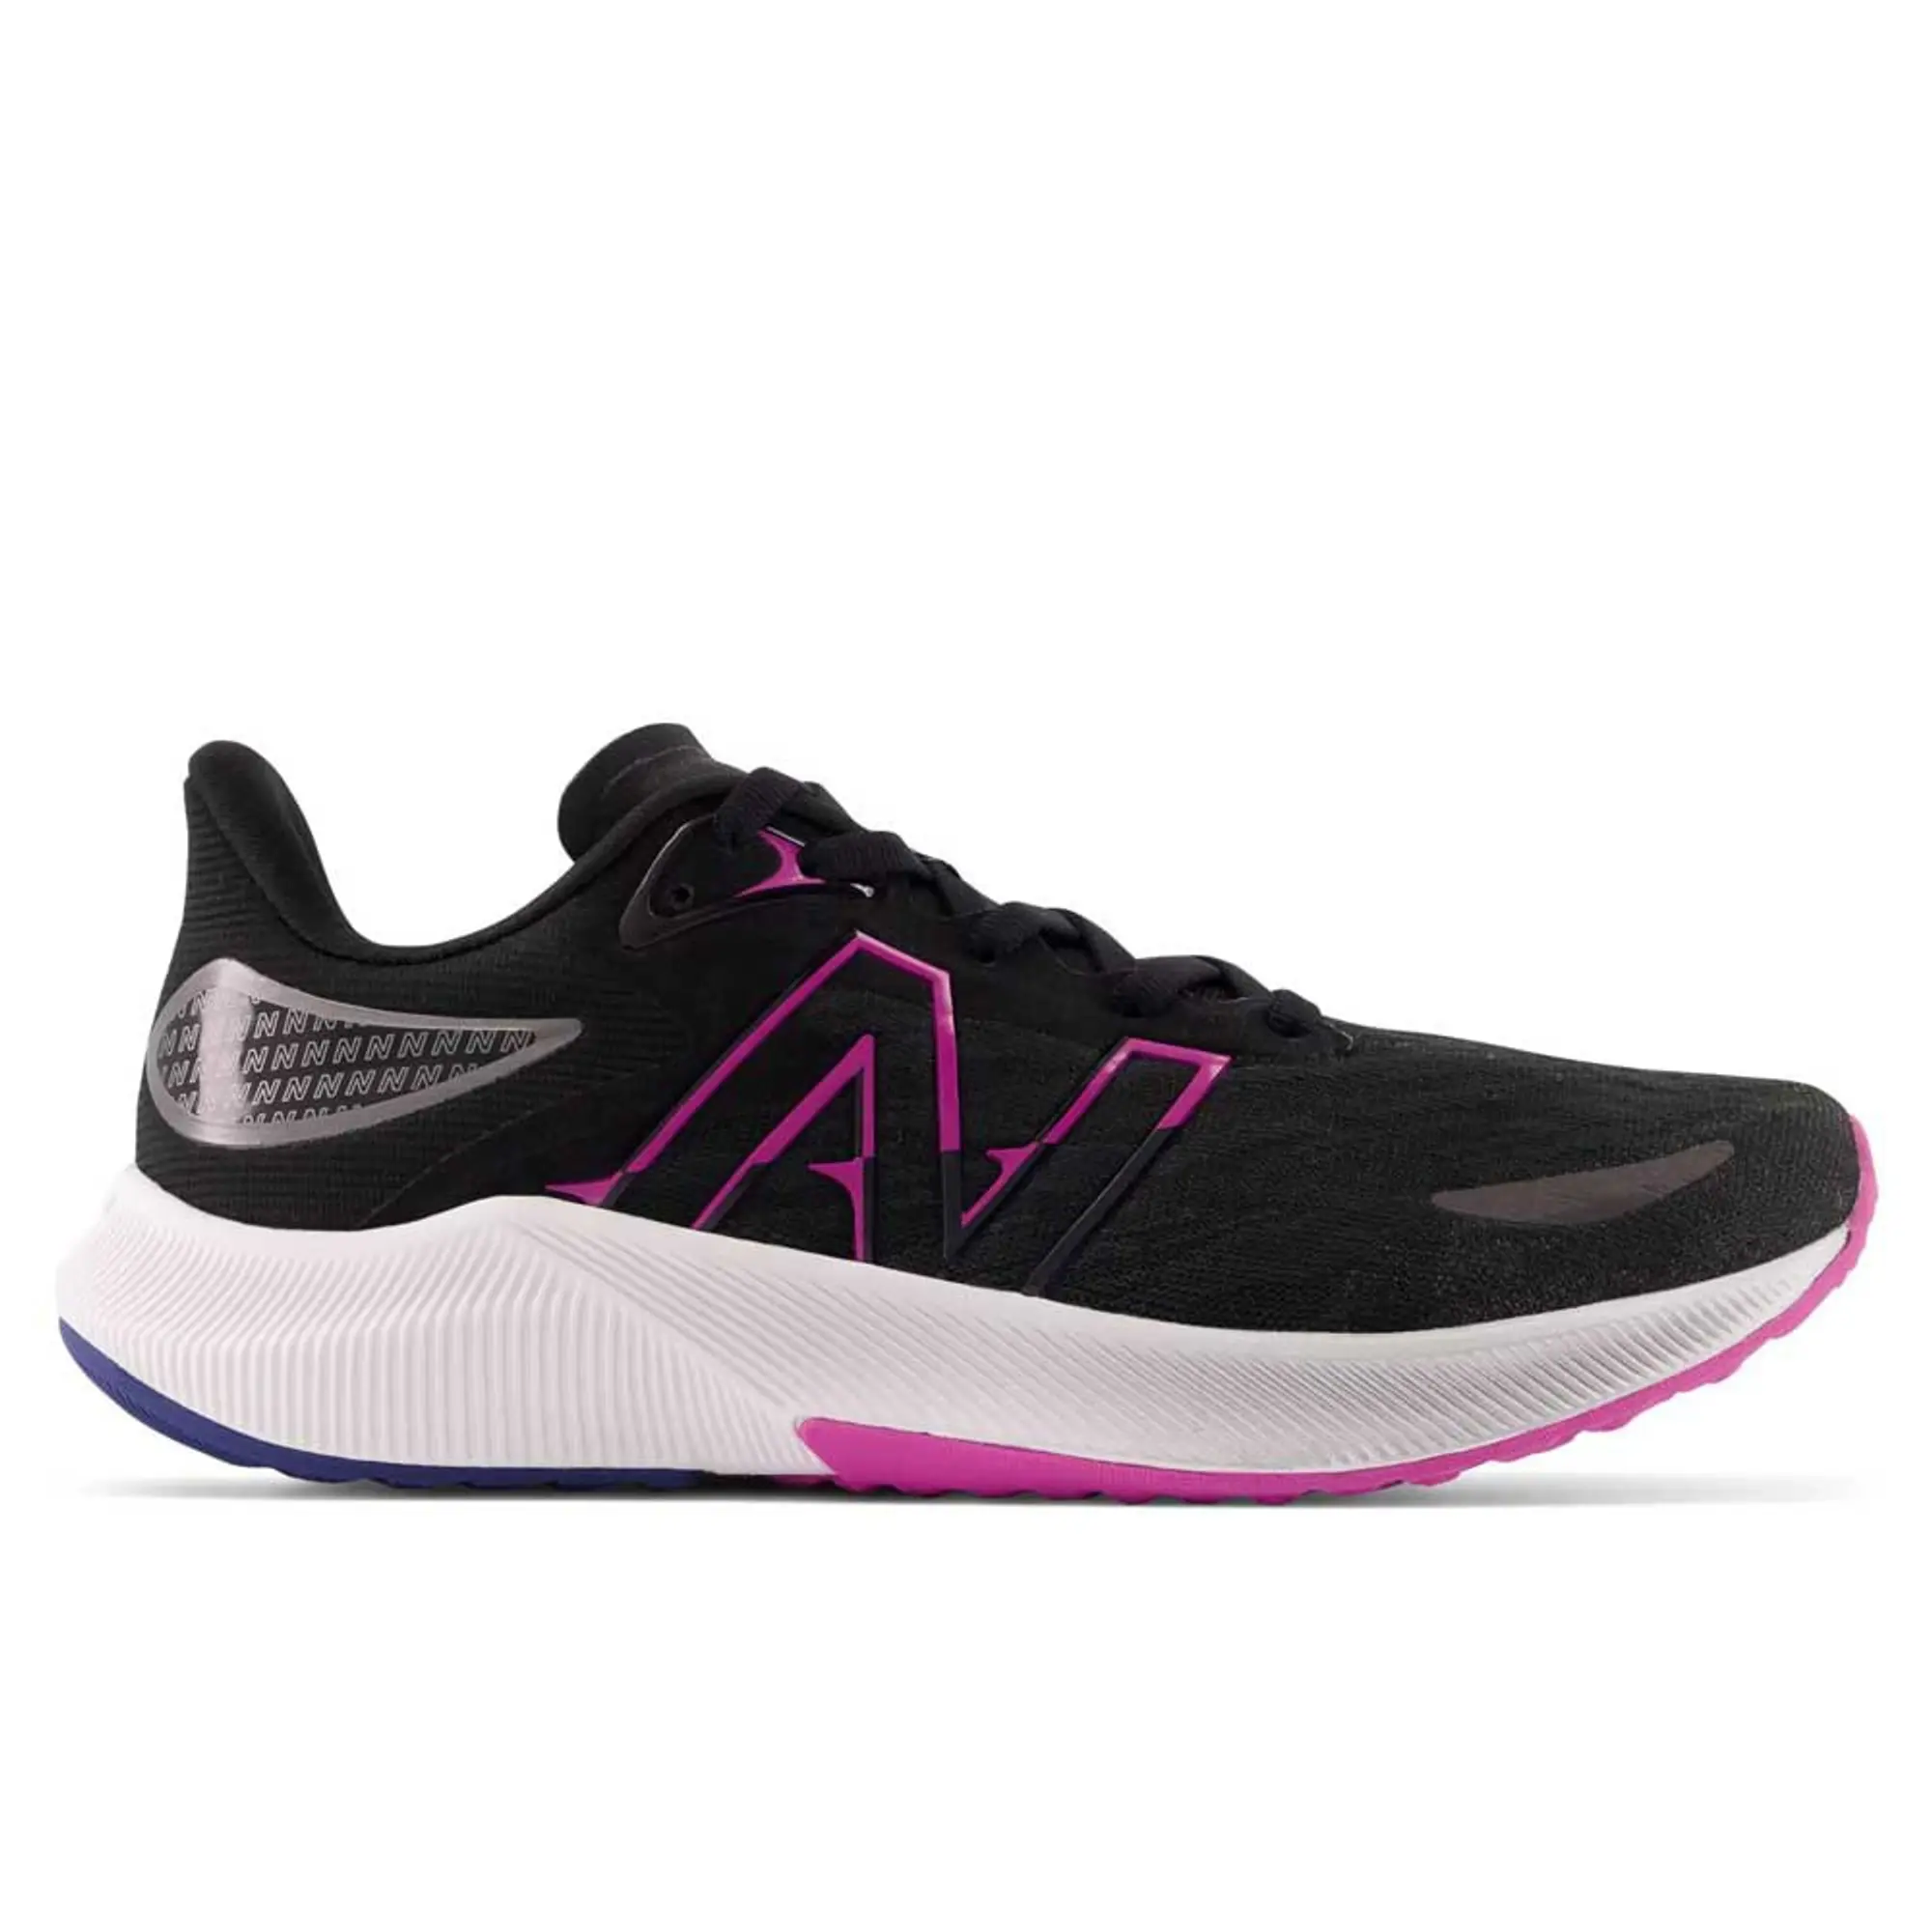 New Balance FuelCell Propel V3 Neutral Running Shoe Women - Black